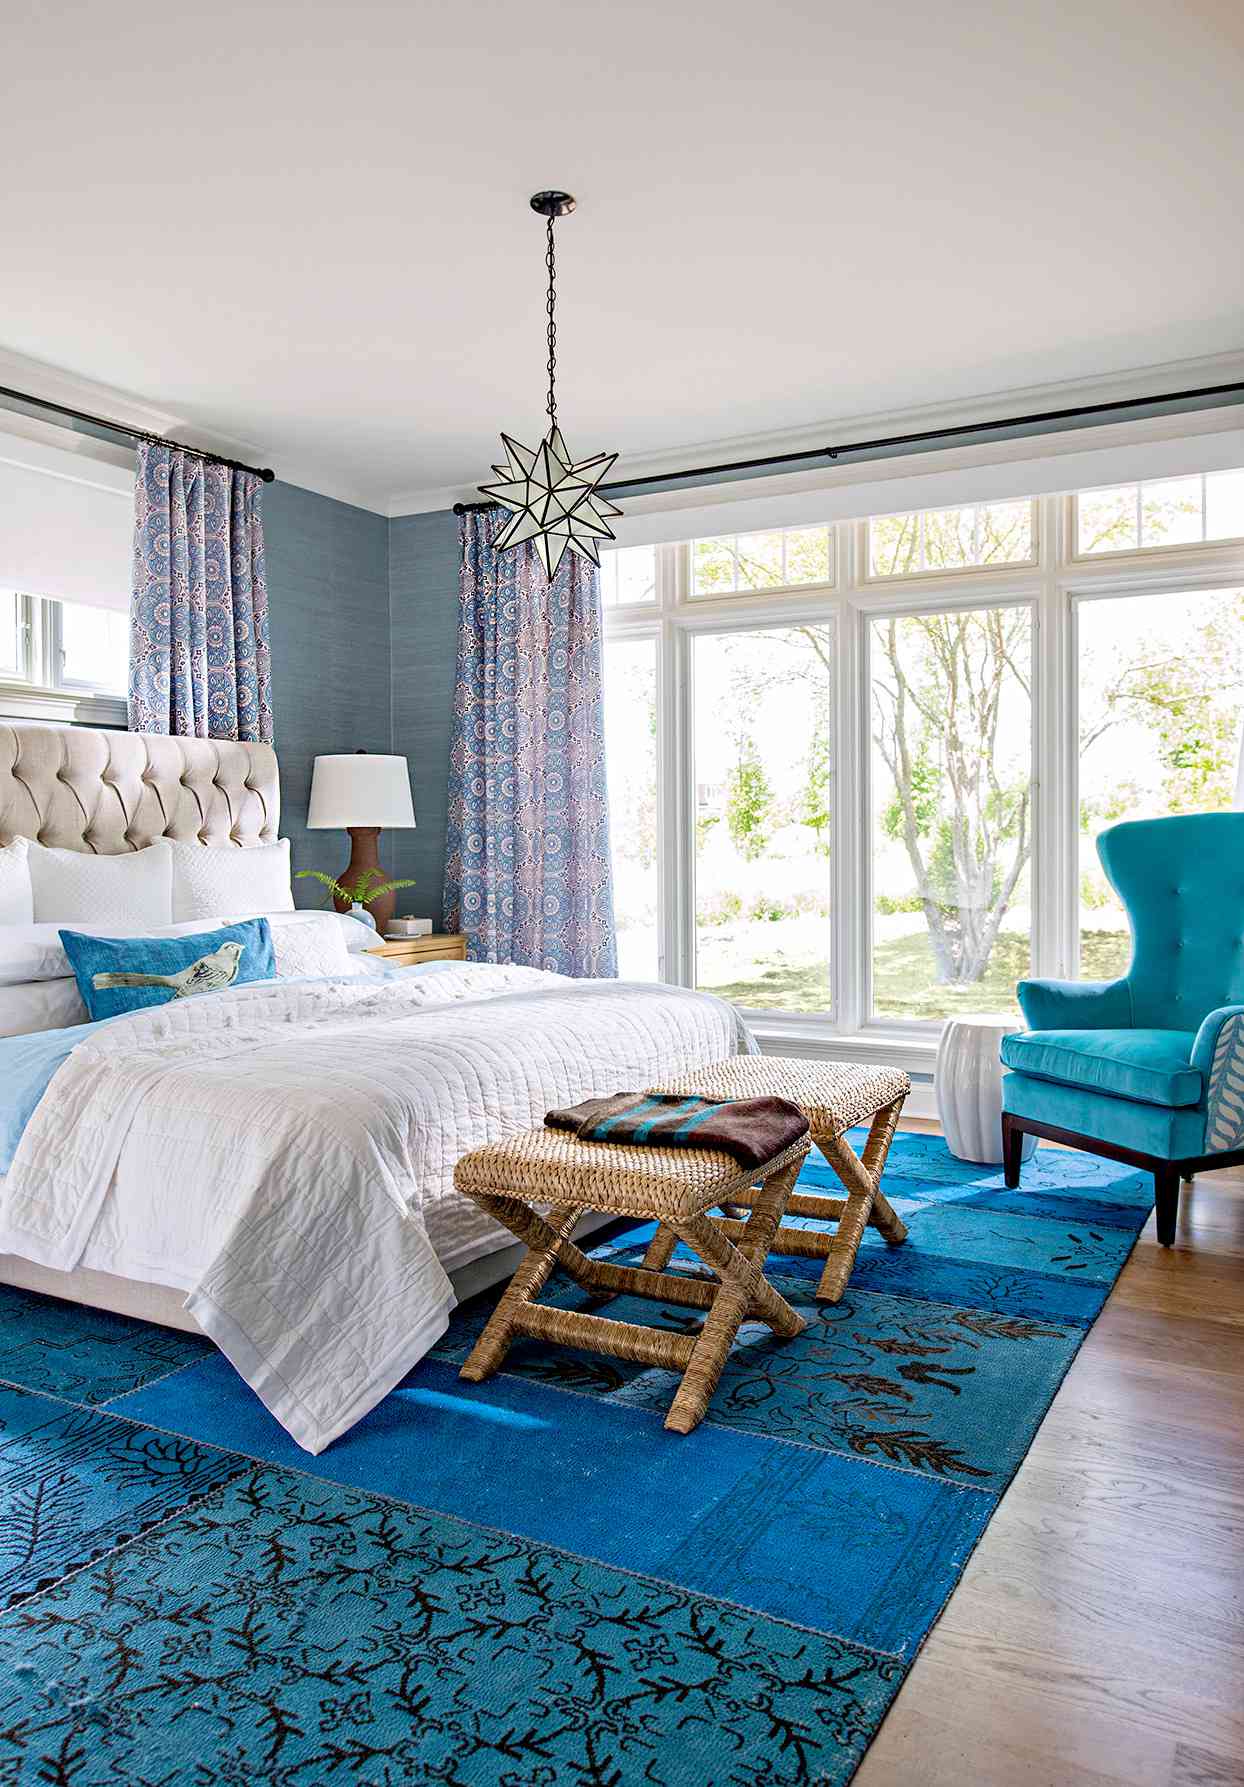 Vibrant Blue Bedroom Furnishings